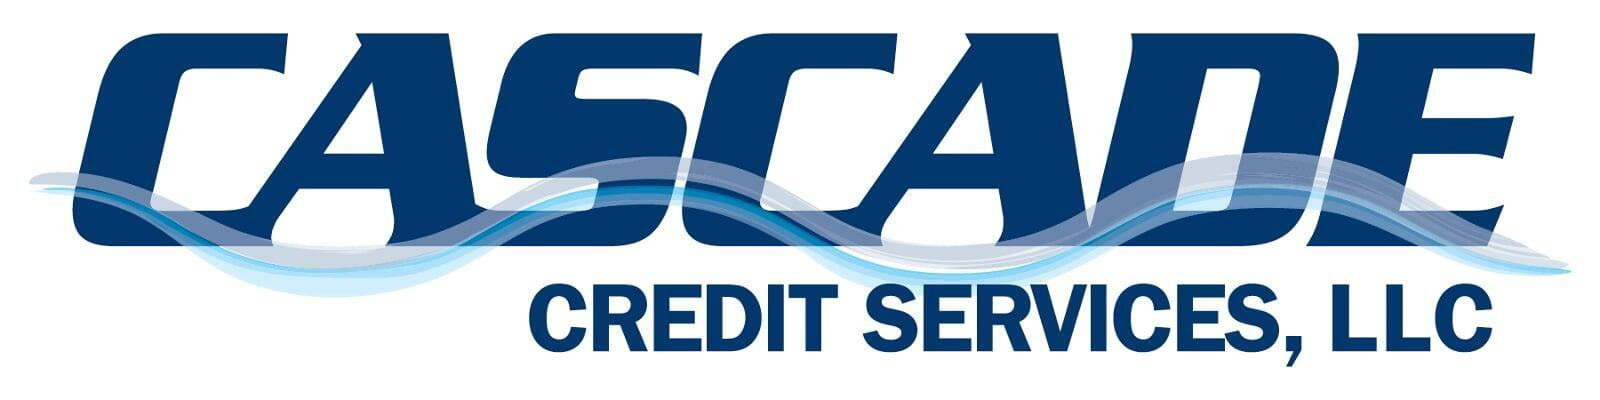 Cascade Credit Services, Inc.